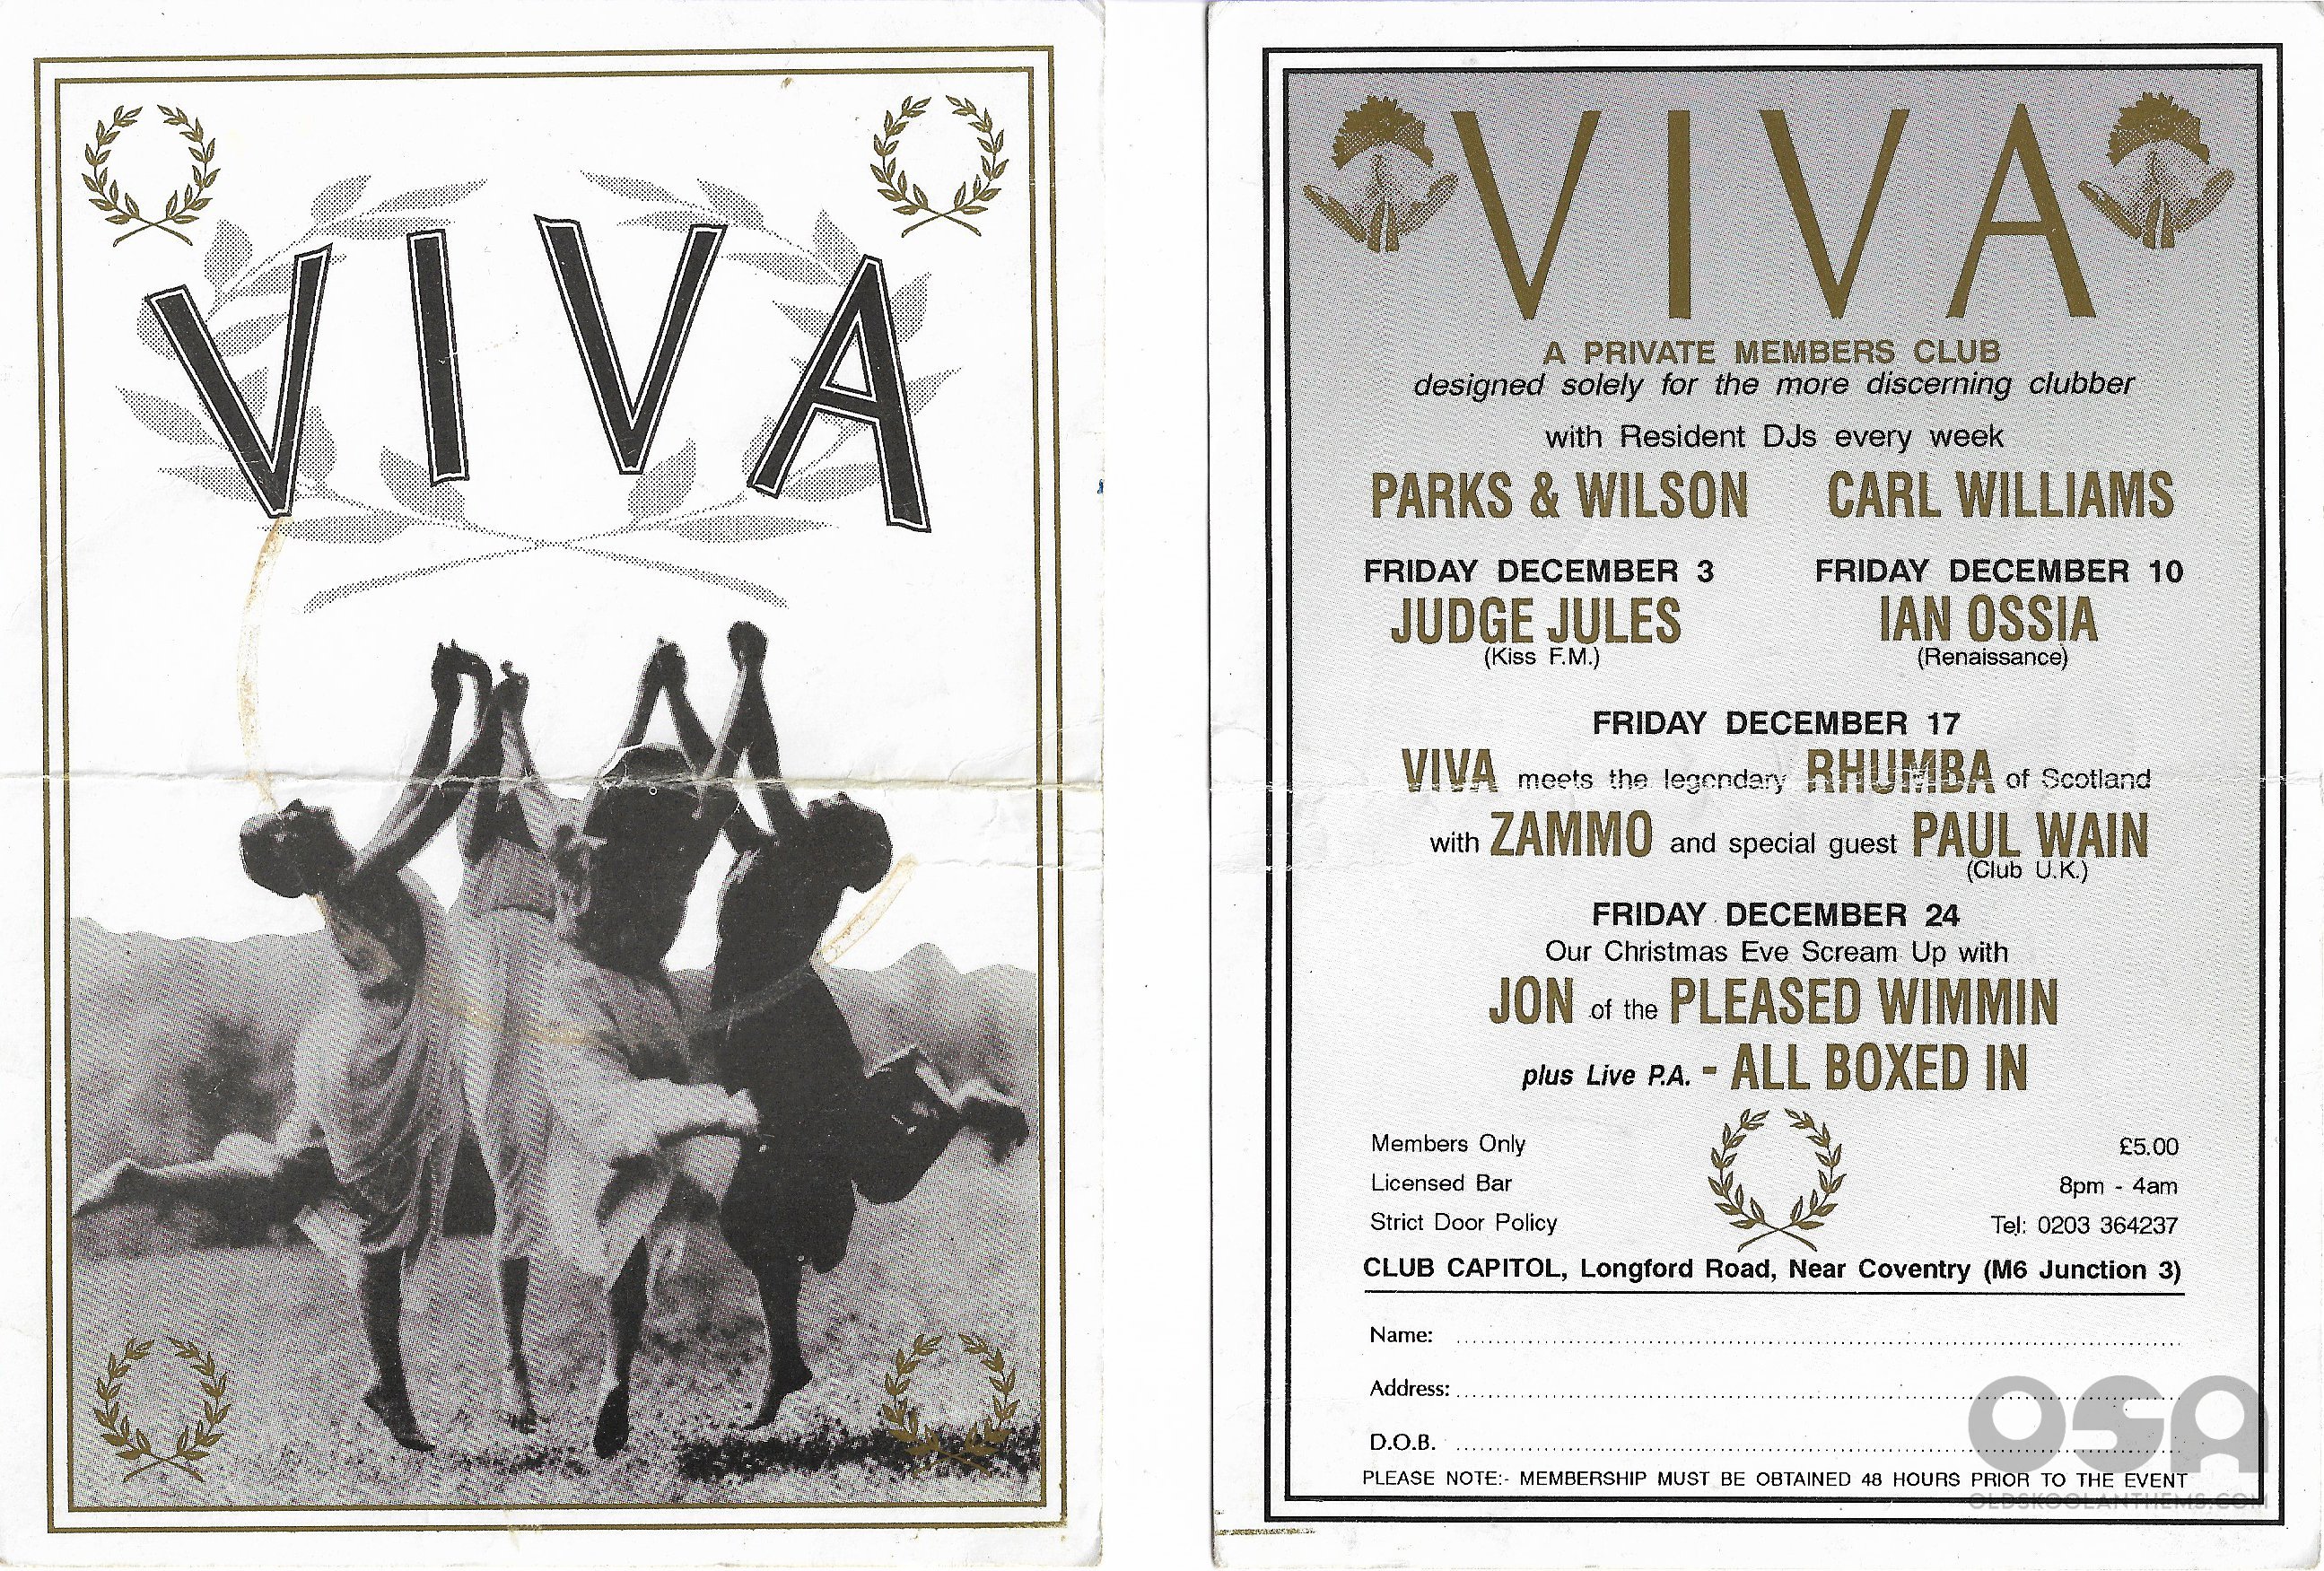 Viva @ Club Capital - Longford Road Near Coventry- 3rd December 199? .jpg